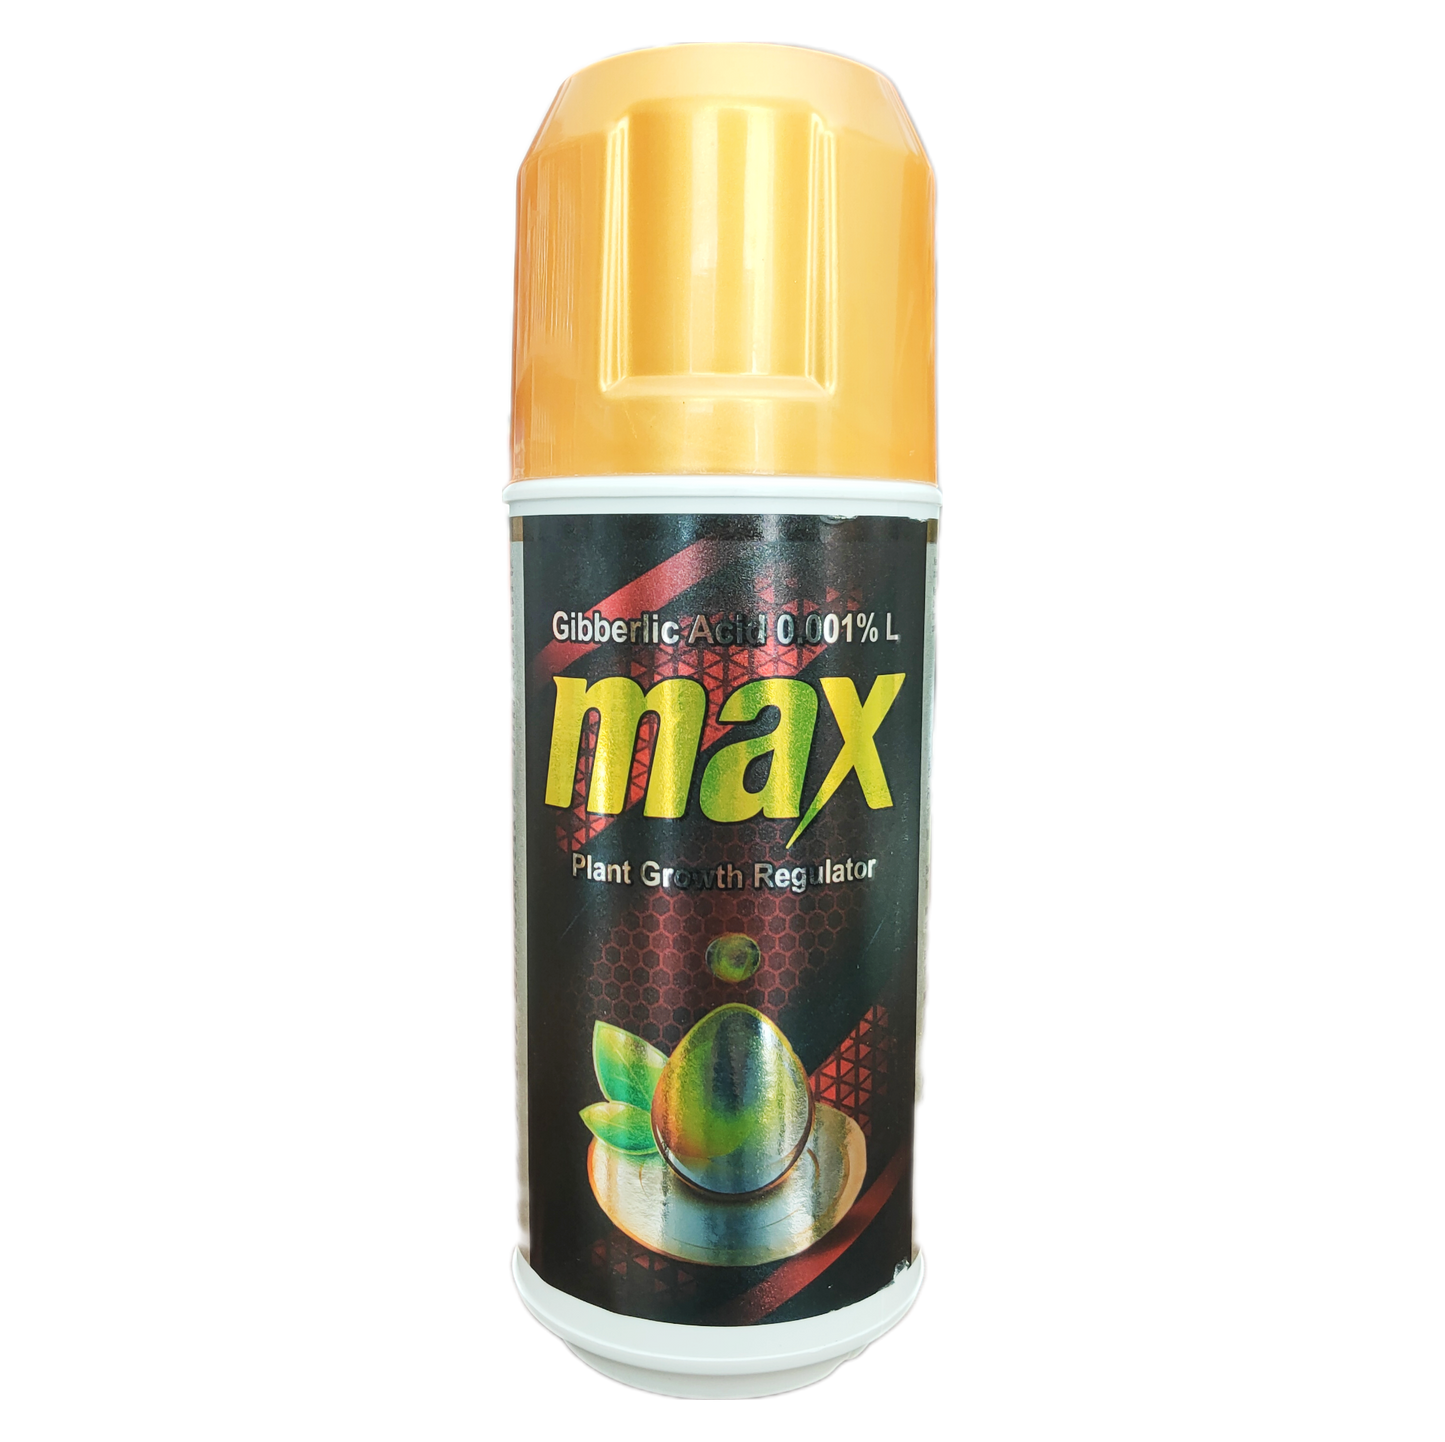 MAX - Gibberellic Acid 0.001% L (Plant Growth Regulator)